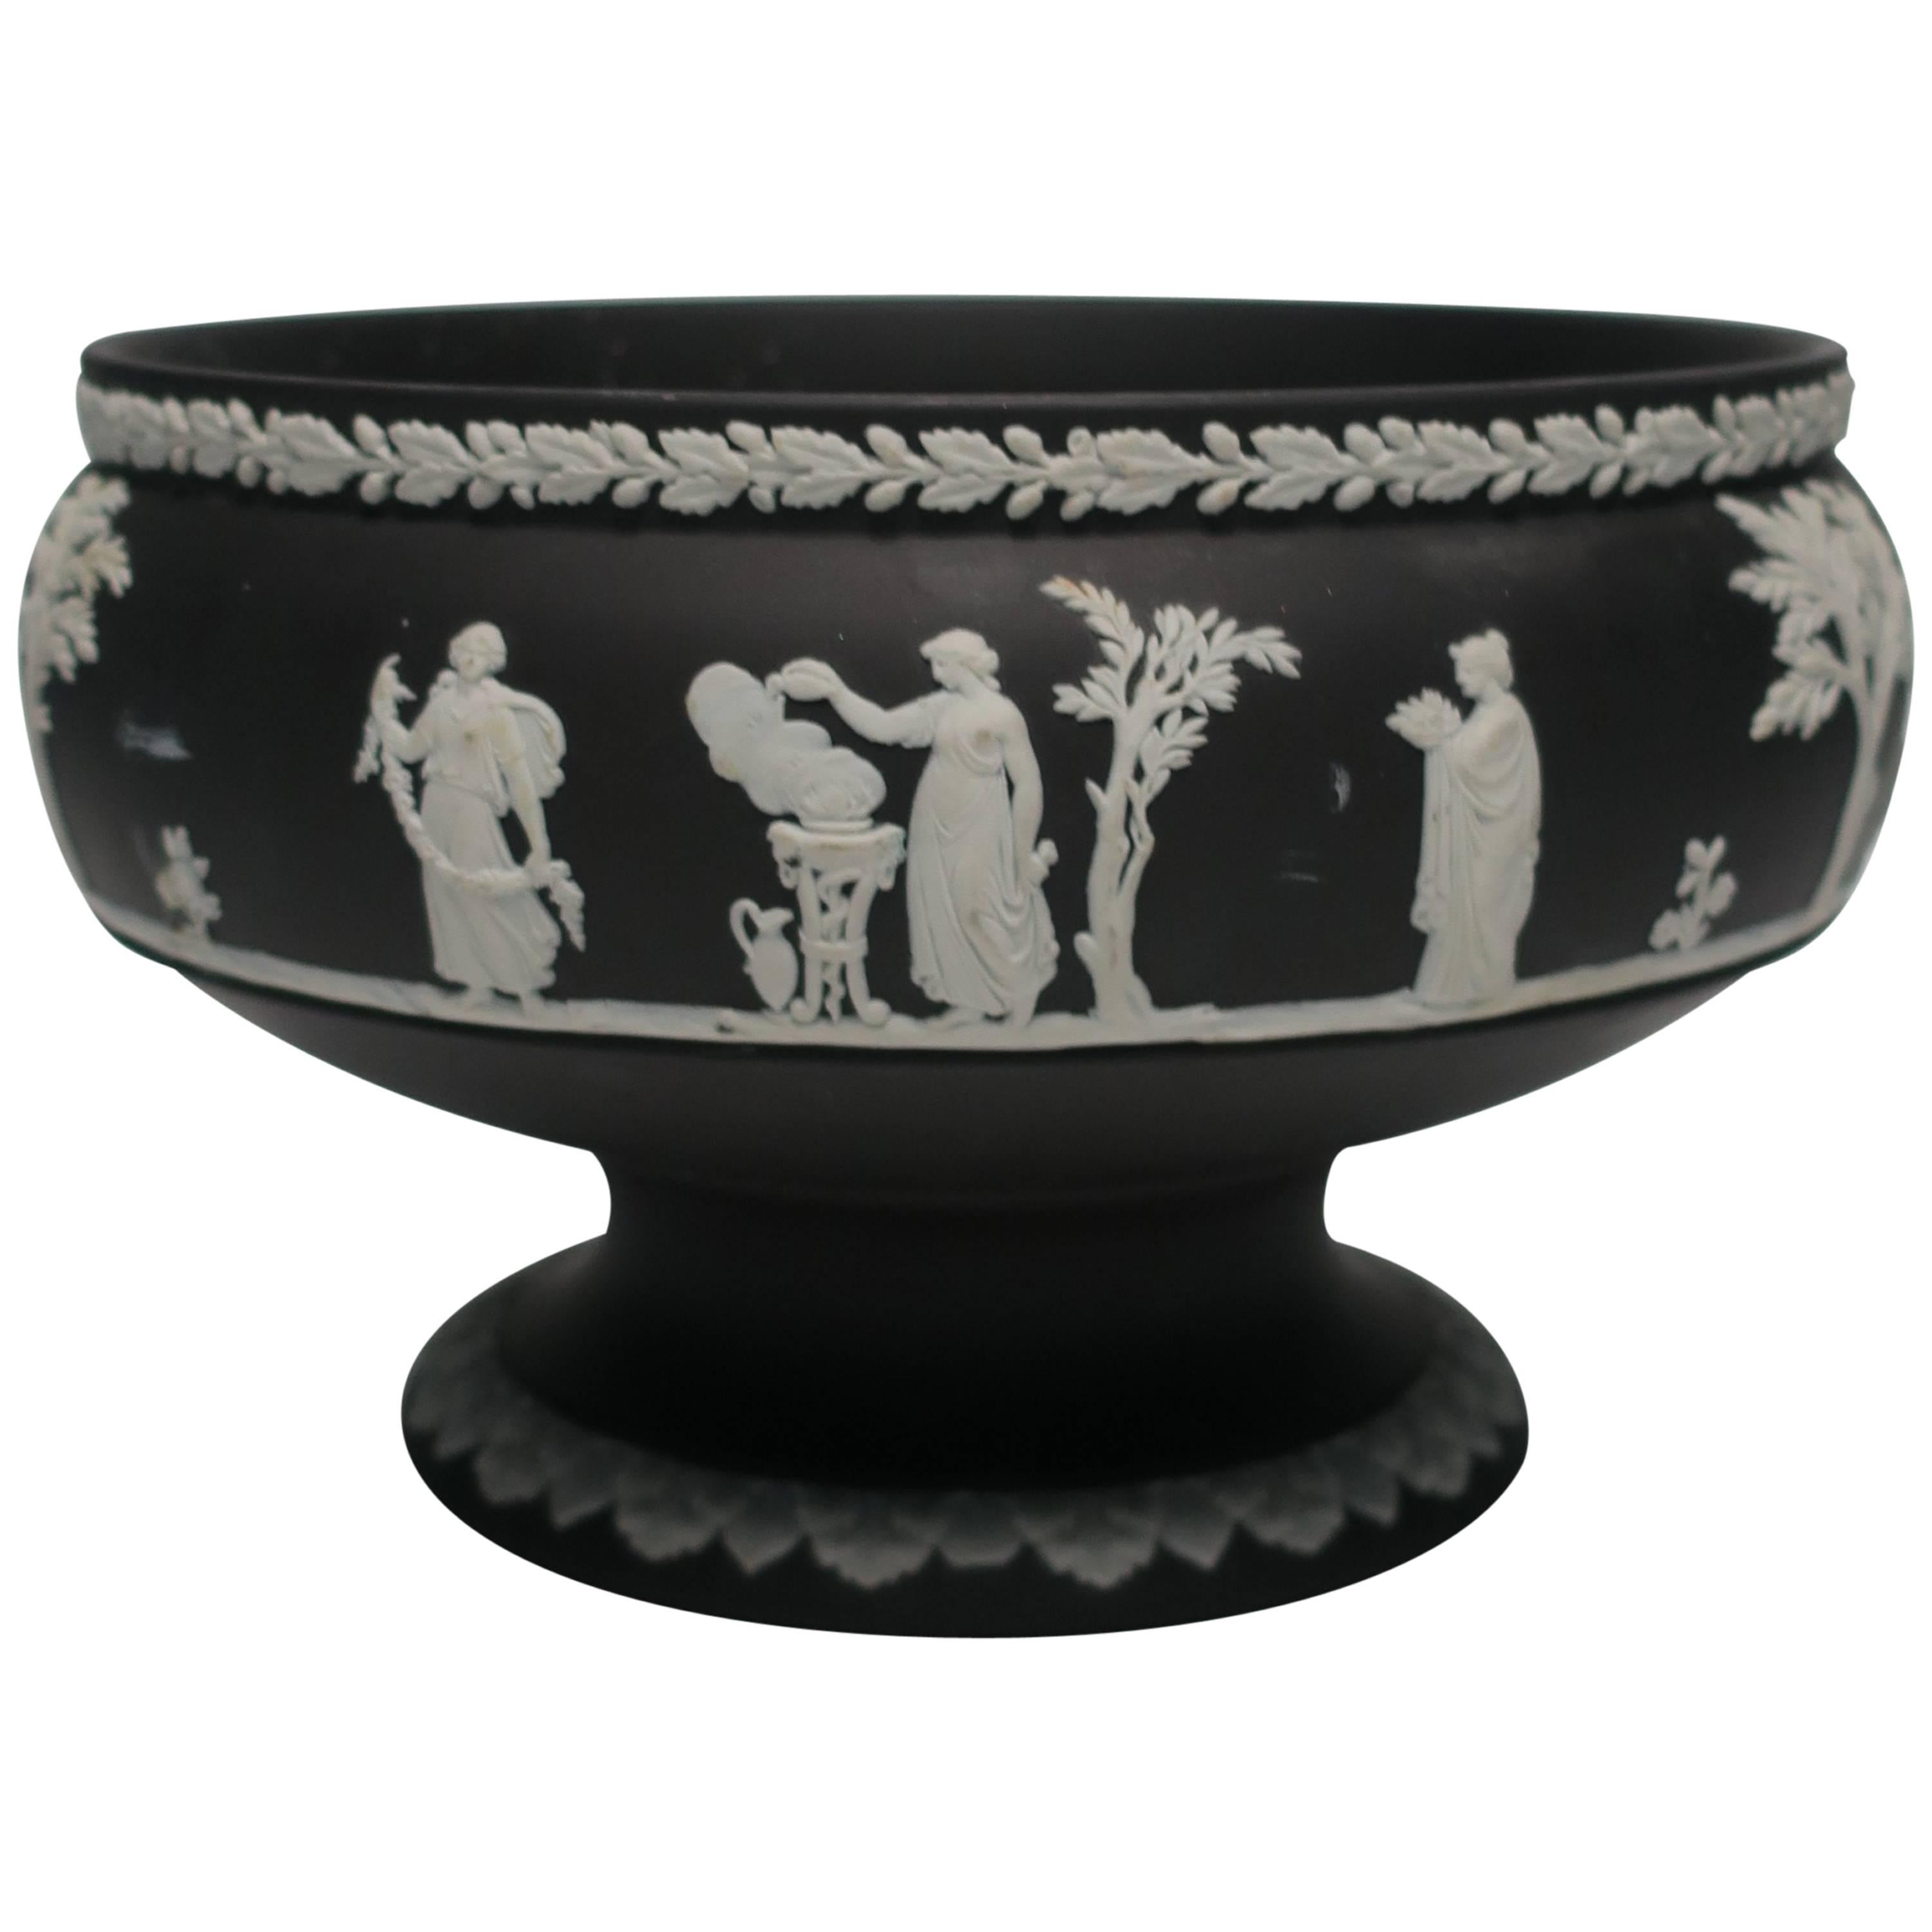 Black and White Basalt Wedgwood Jasperware Urn or Centerpiece Bowl